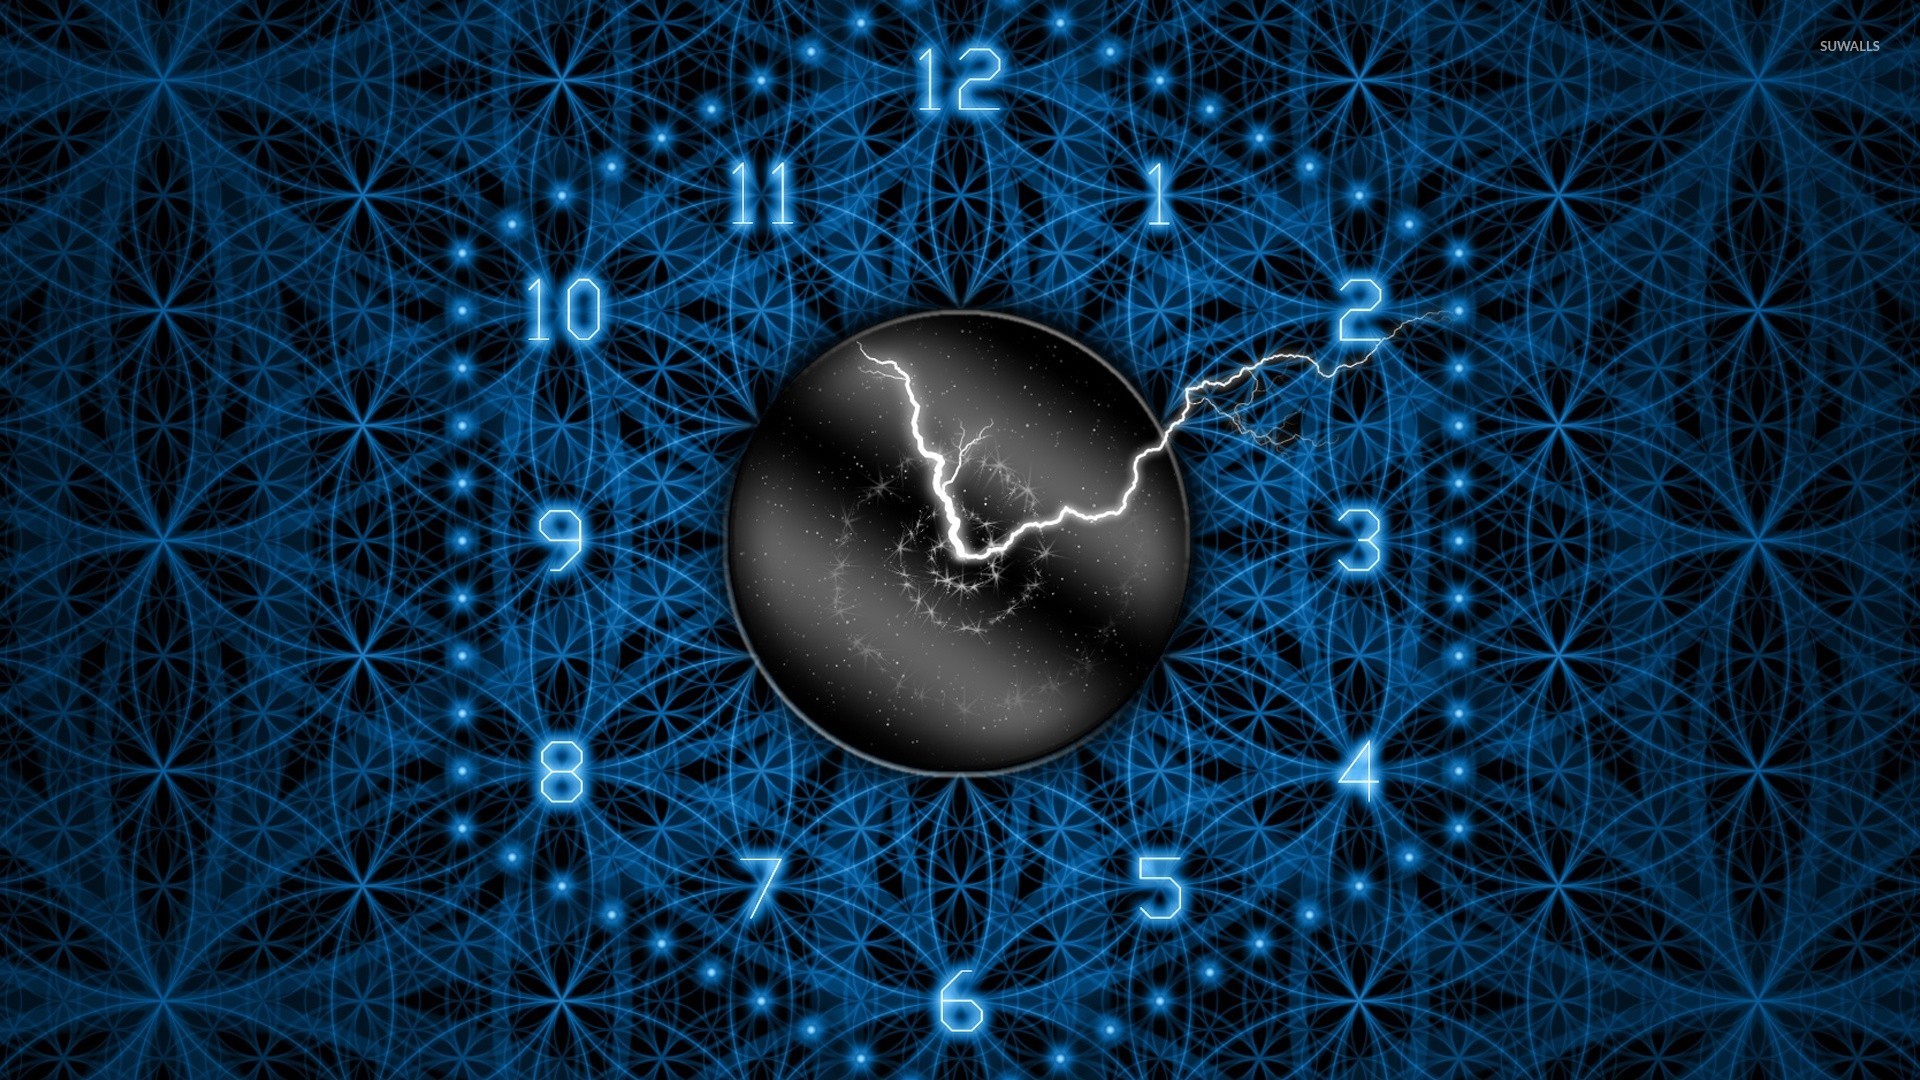 Star alliance world clock wallpaper download